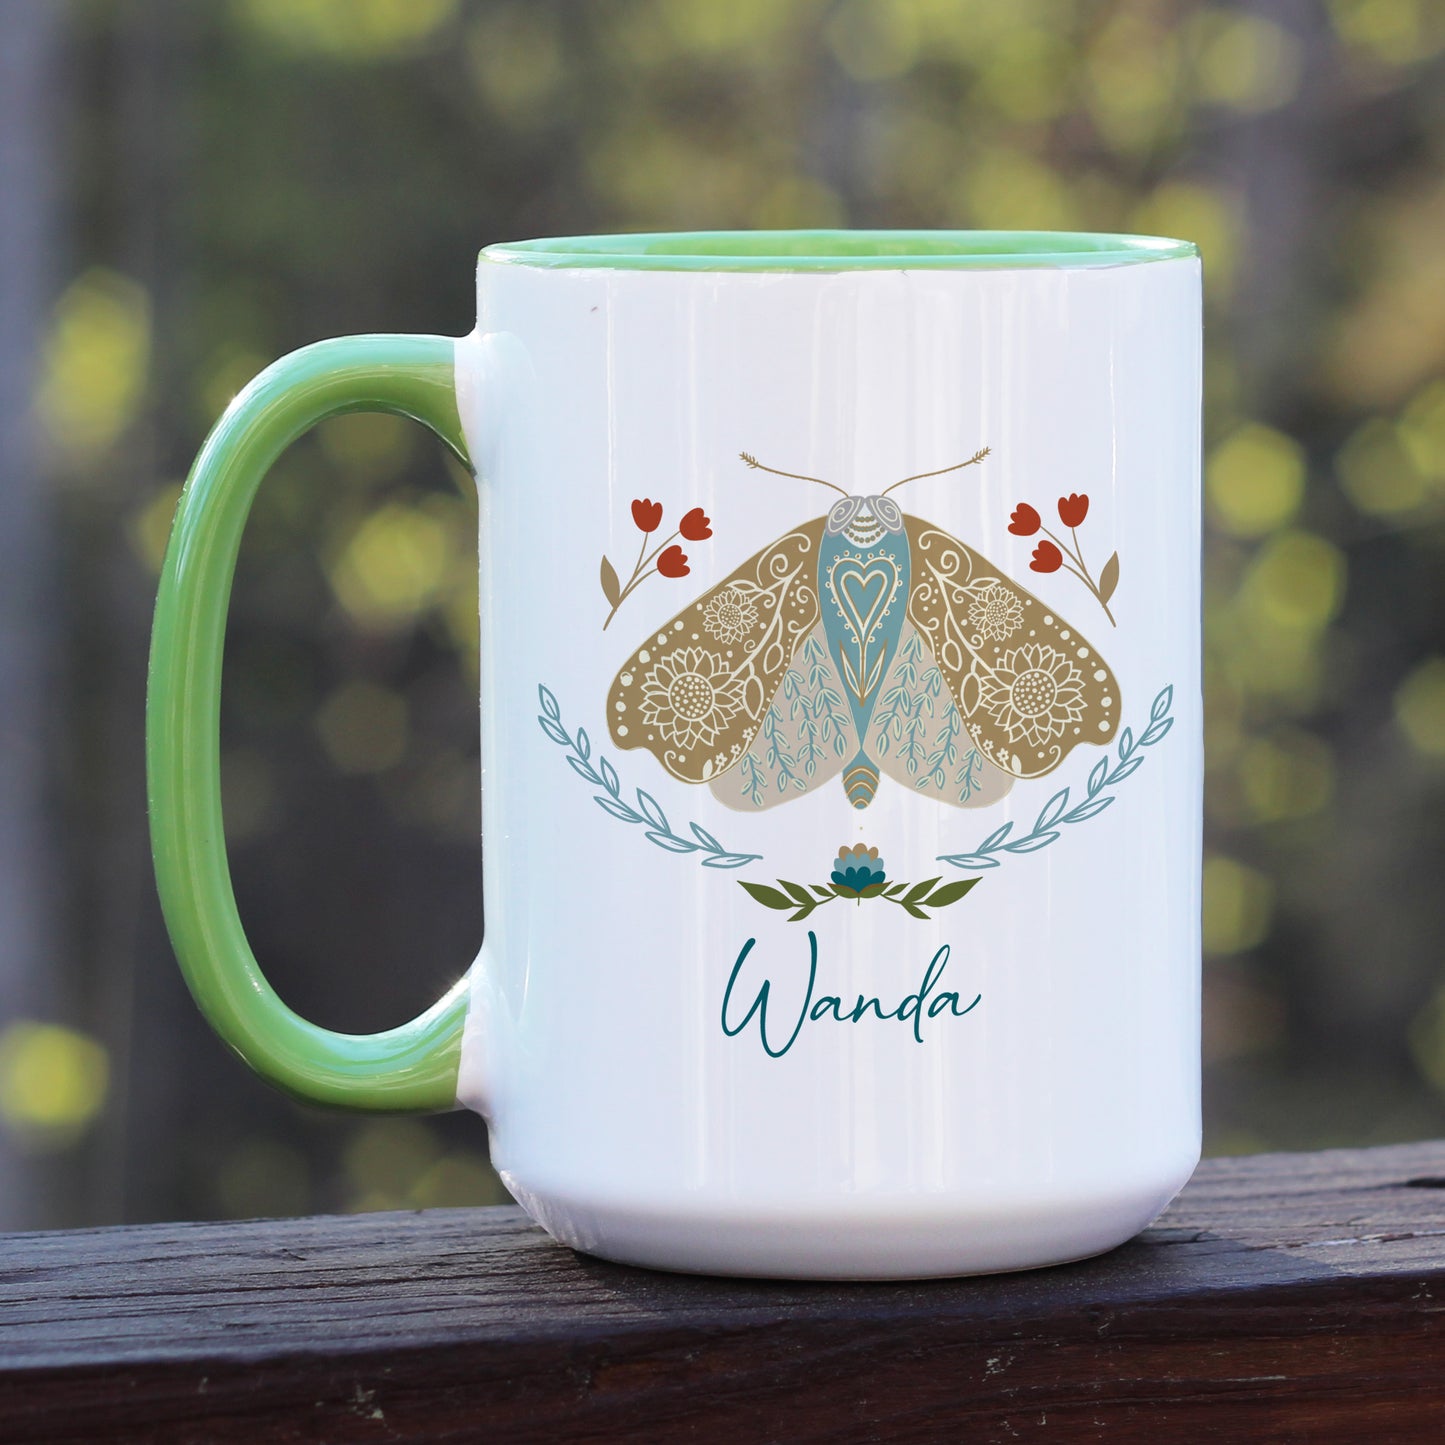 Boho floral moth mug personalized with name. The mug has a green handle.